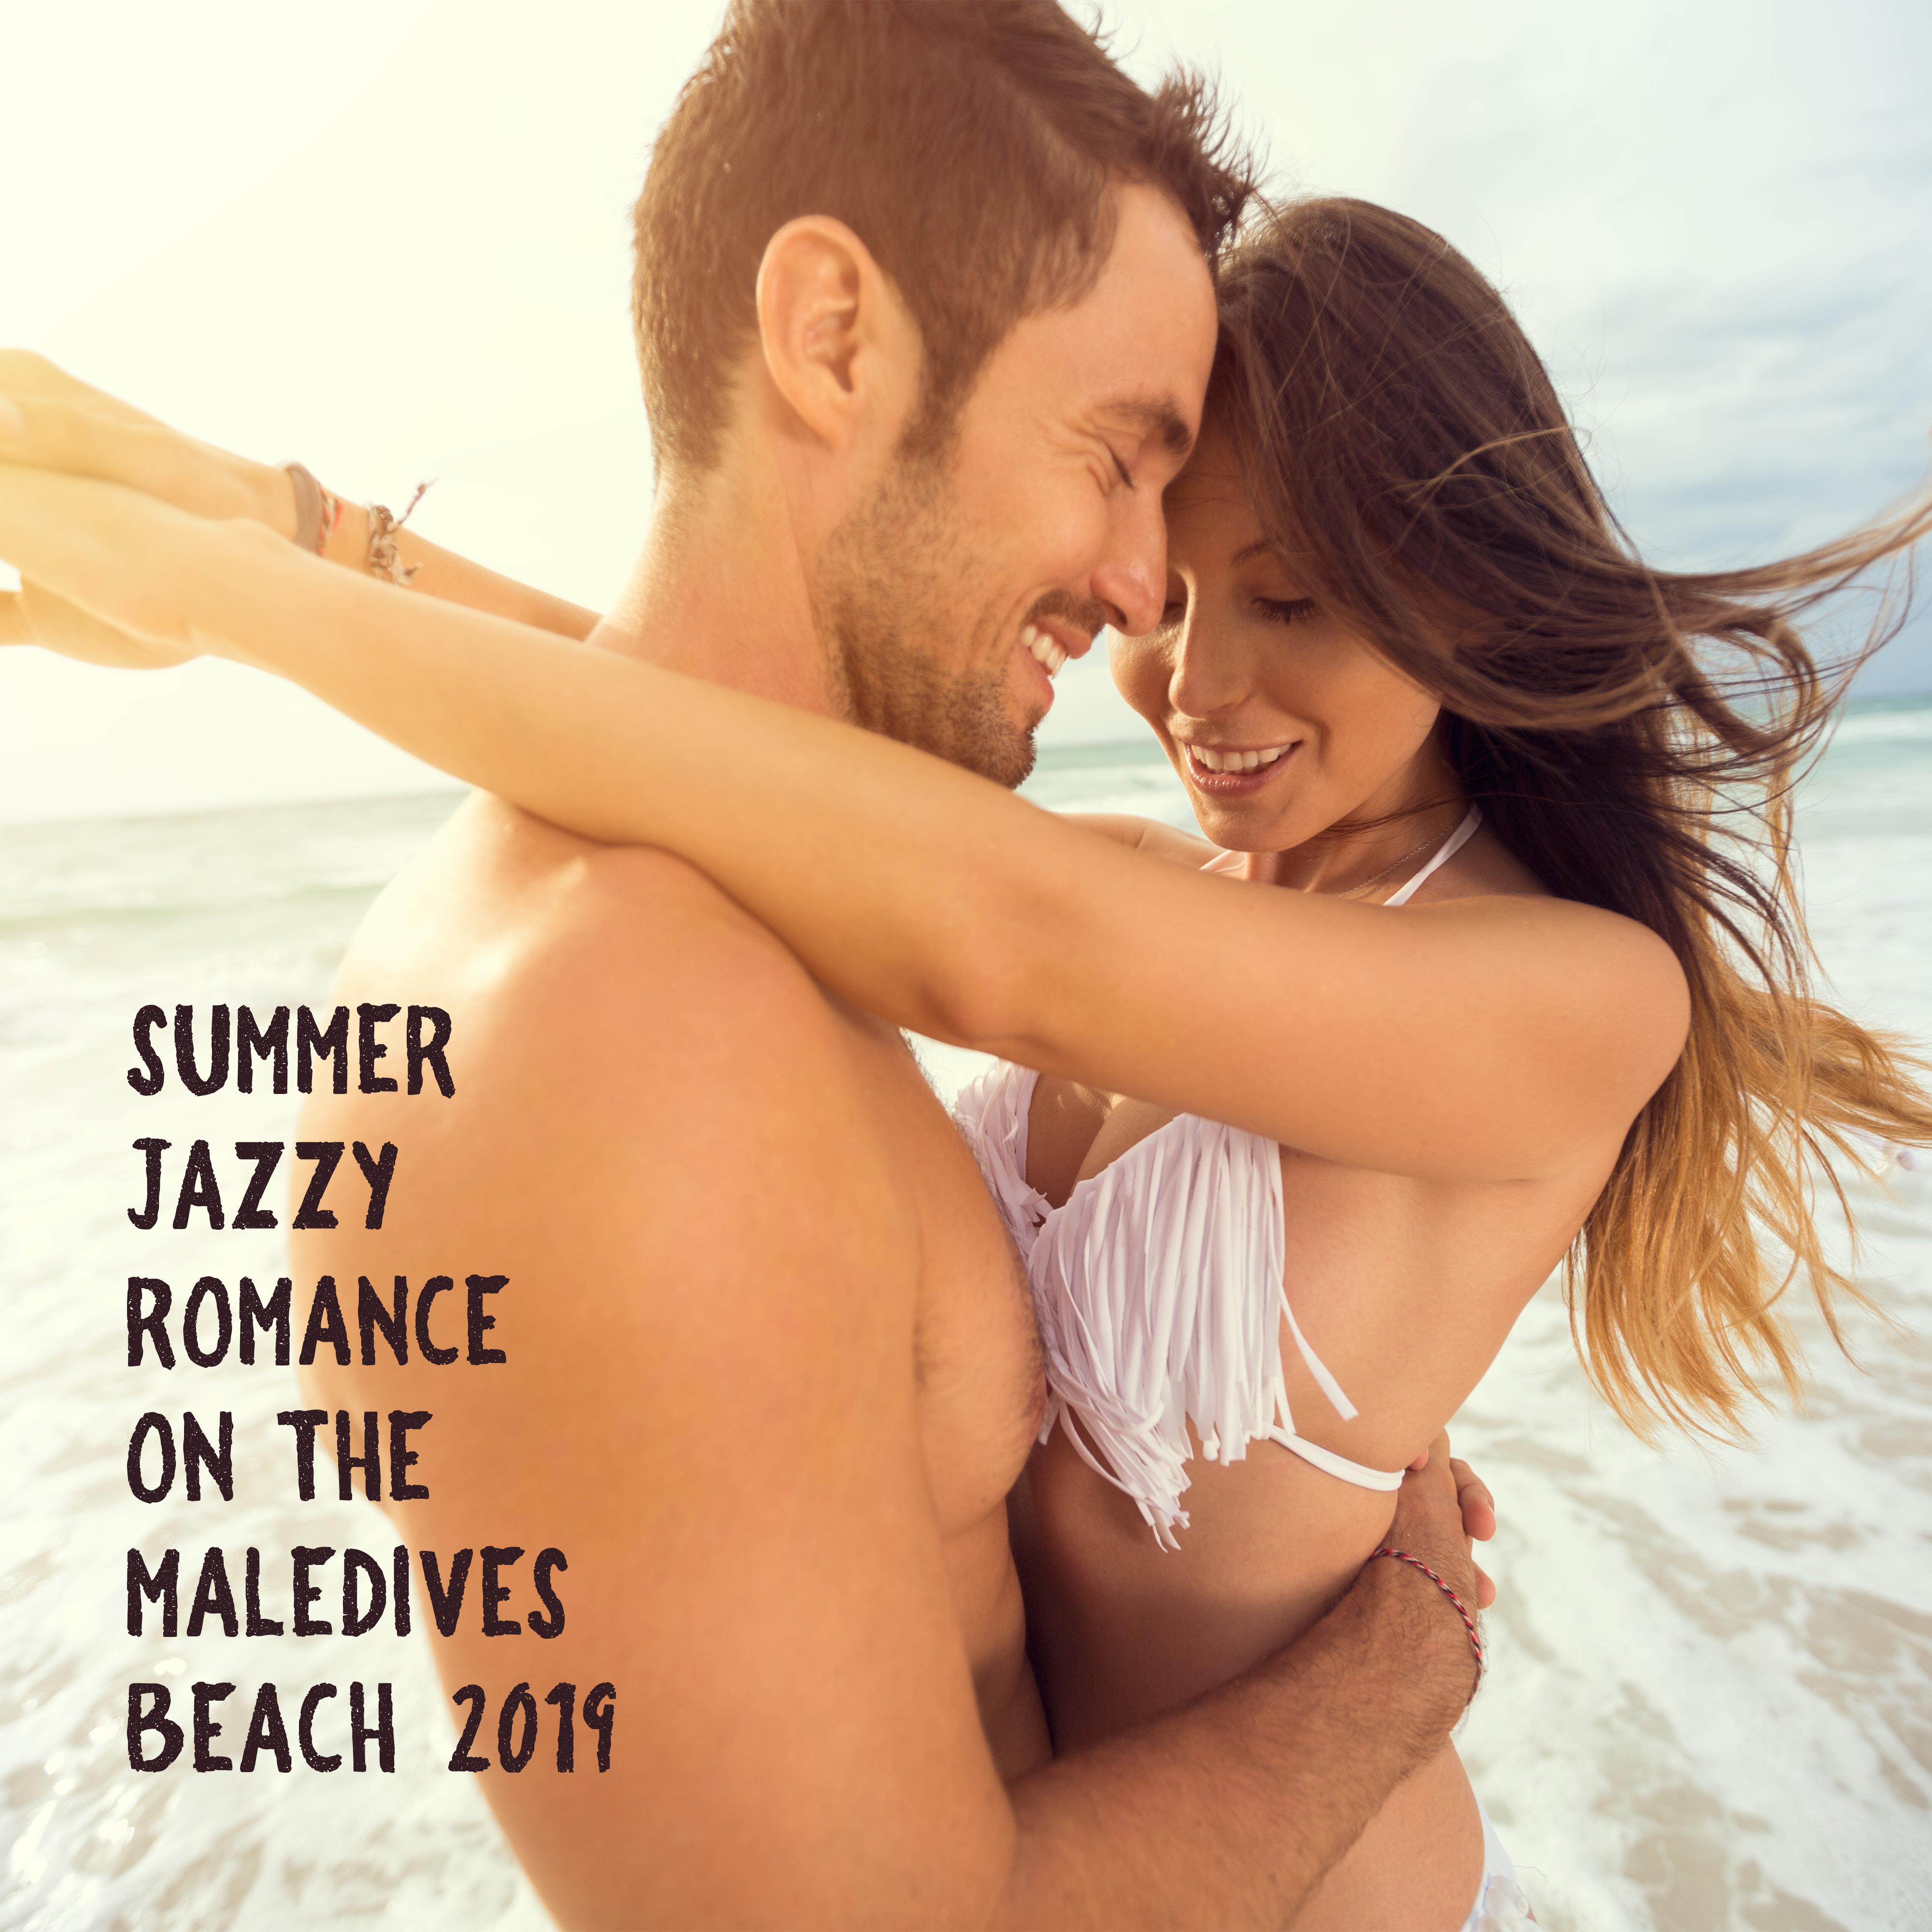 Summer Jazzy Romance on the Maledives Beach 2019